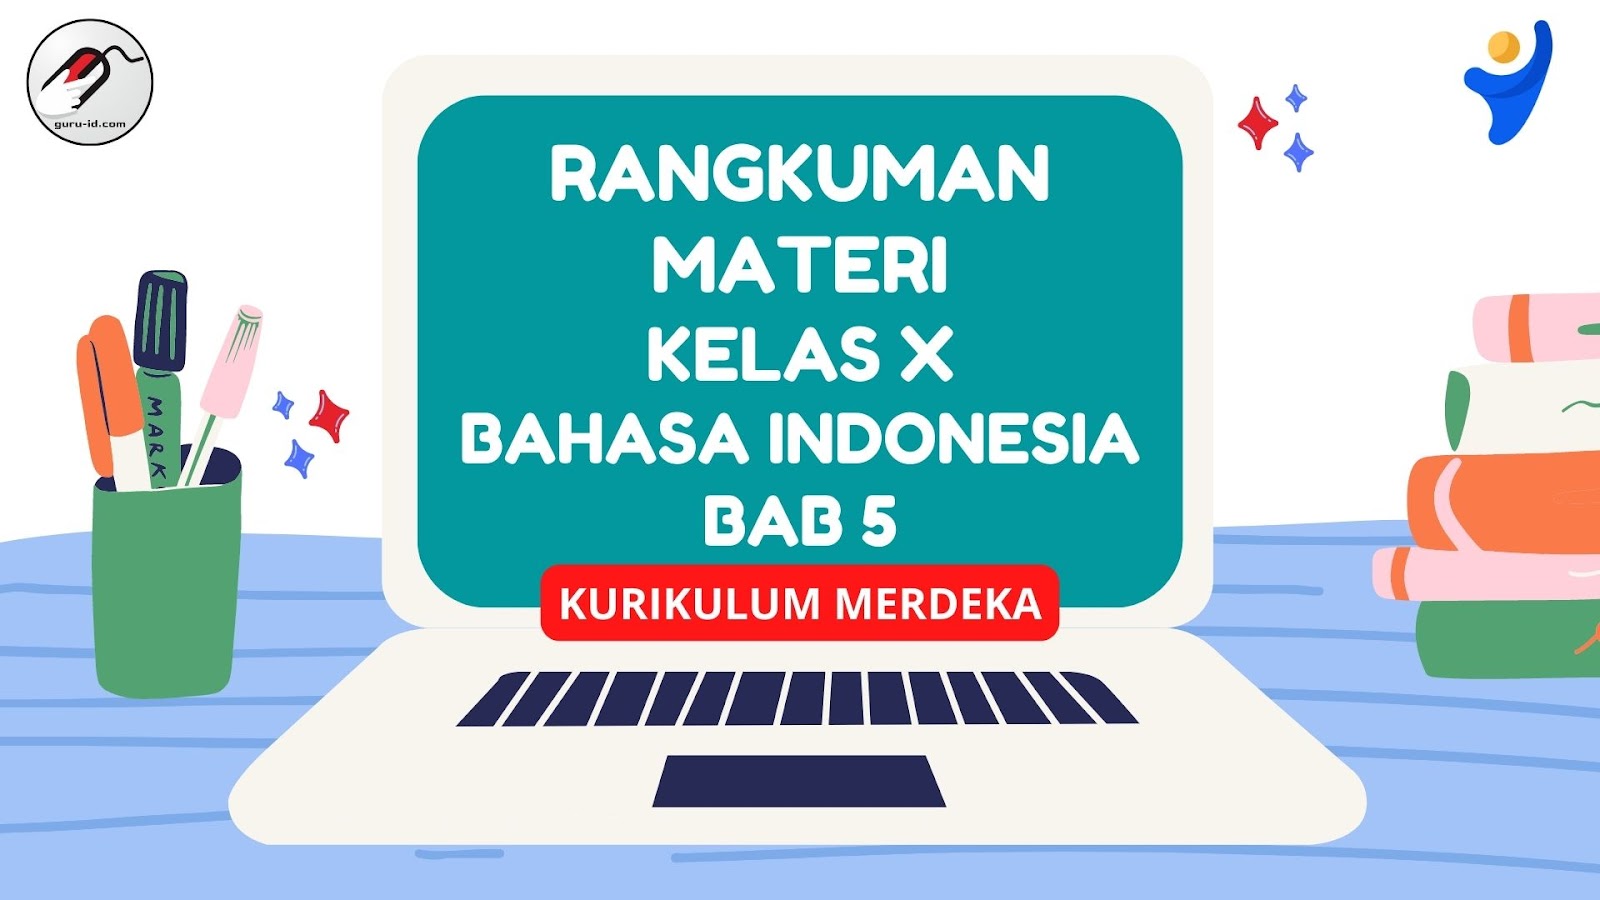 Rangkuman Materi bahasa indonesia kelas 10 bab 5